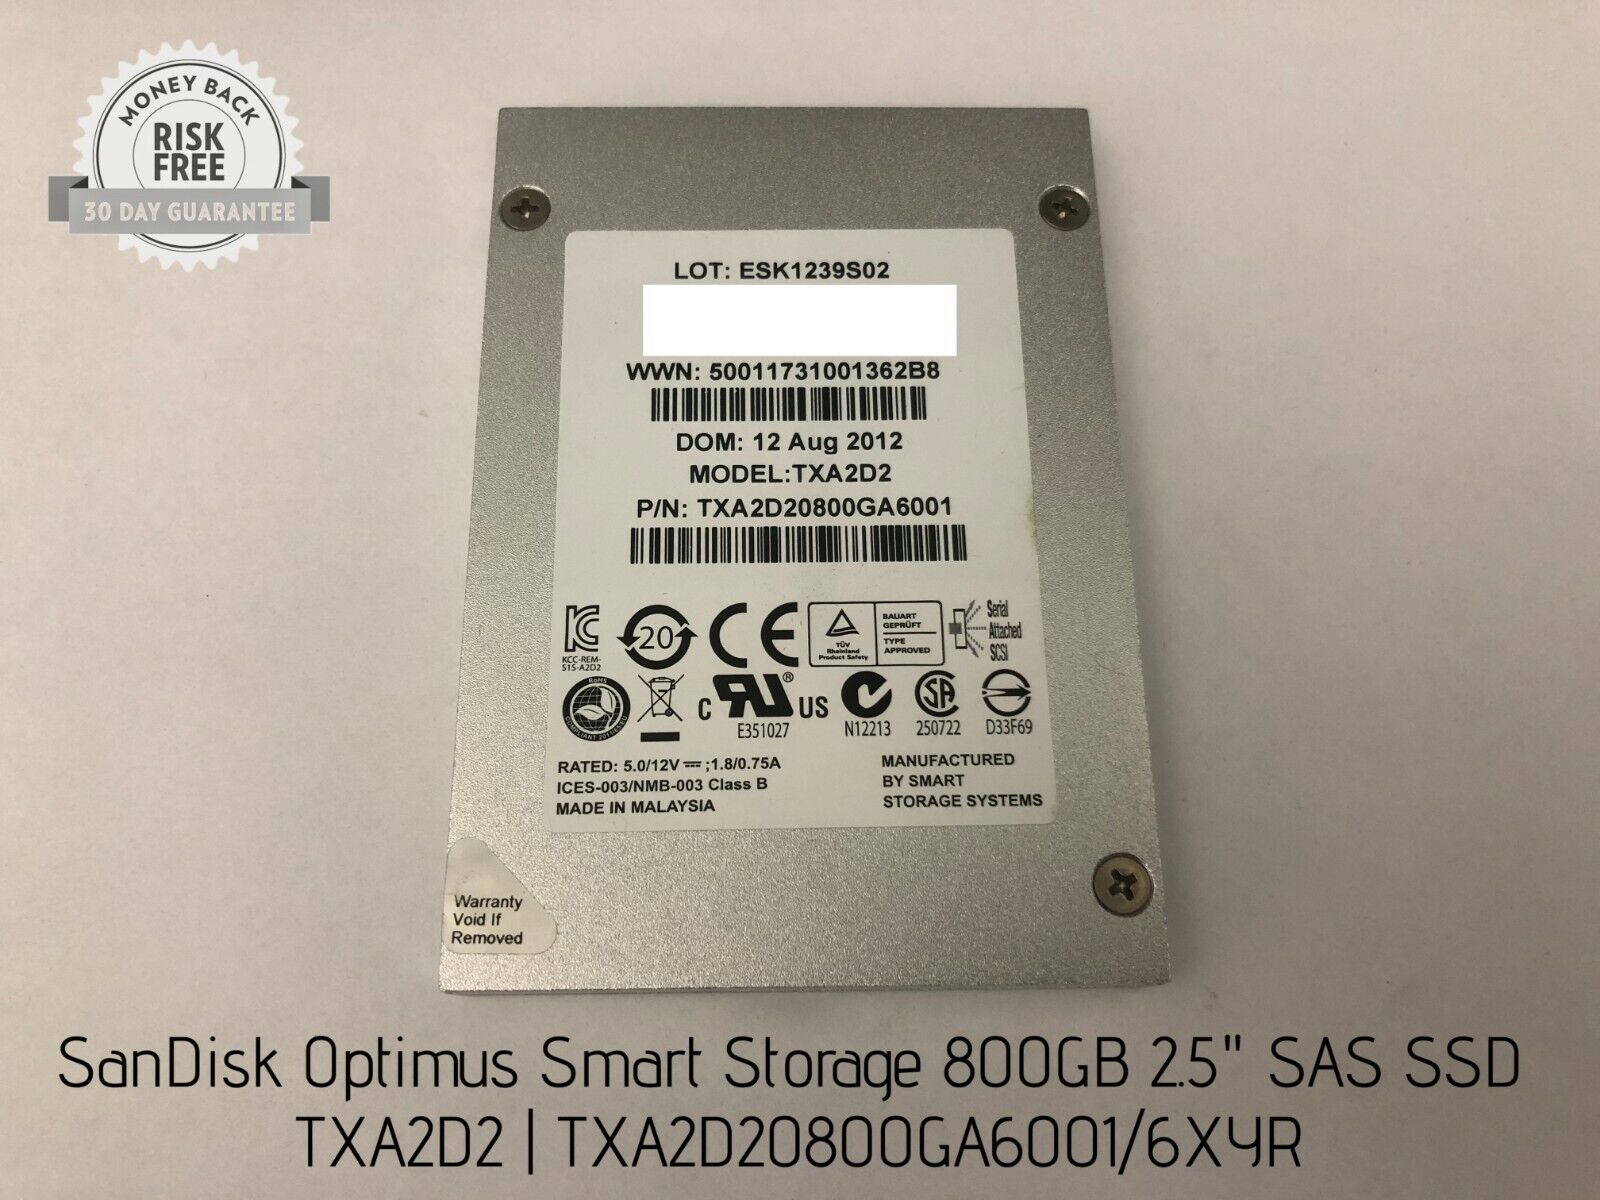 SanDisk Optimus Smart Storage 800GB 2.5" SAS SSD, TXA2D2, TXA2D20800GA6001/6XYR